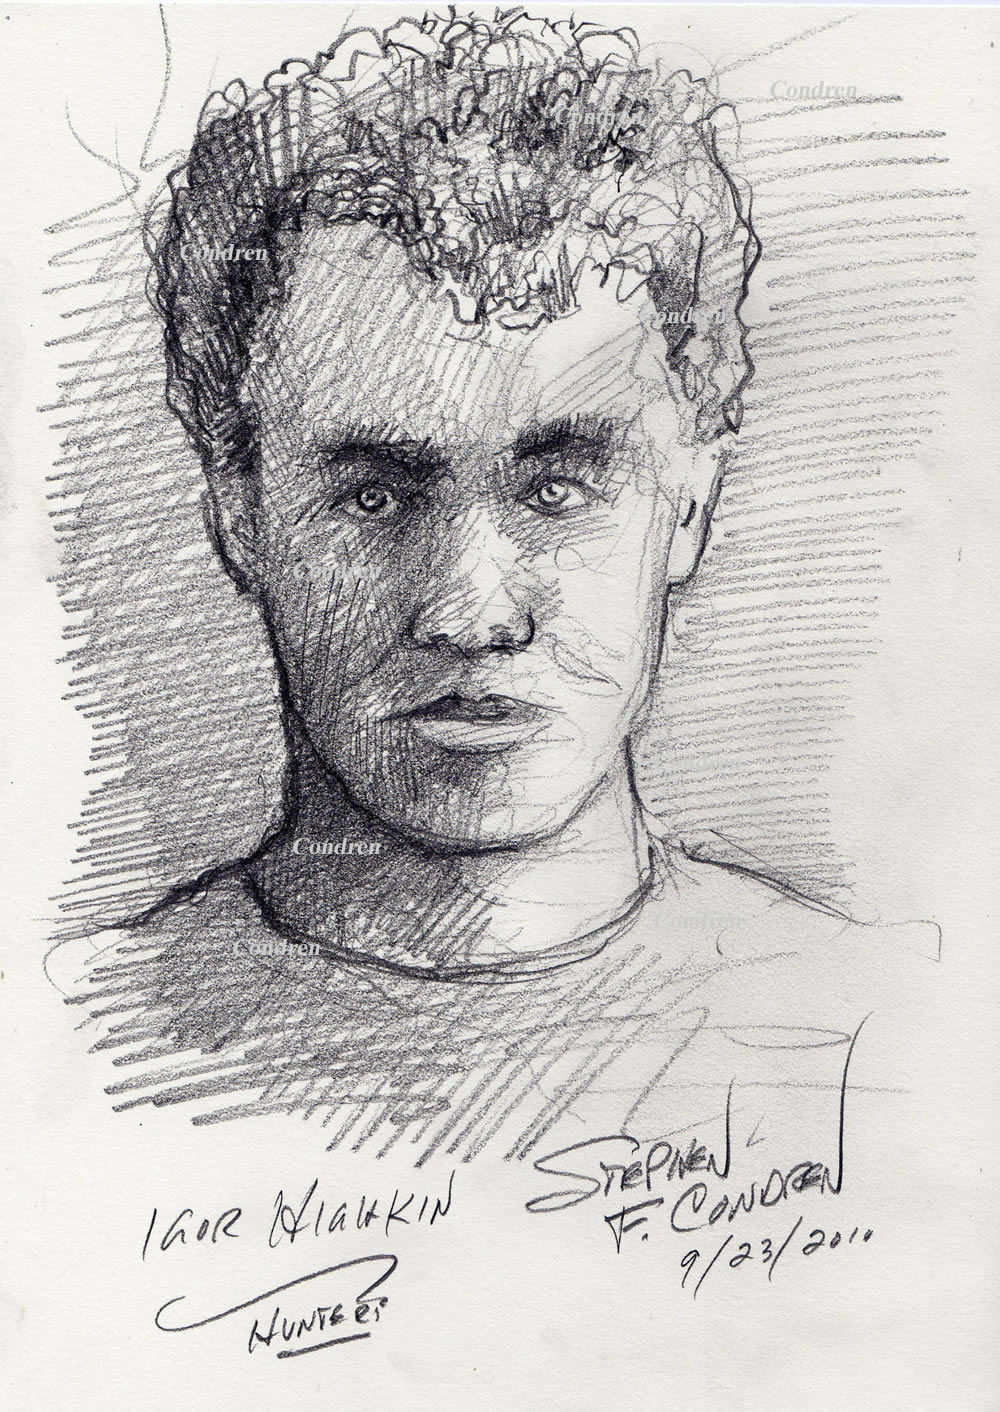 Pencil portrait of Igor Highkin by artist Stephen F. Condren.